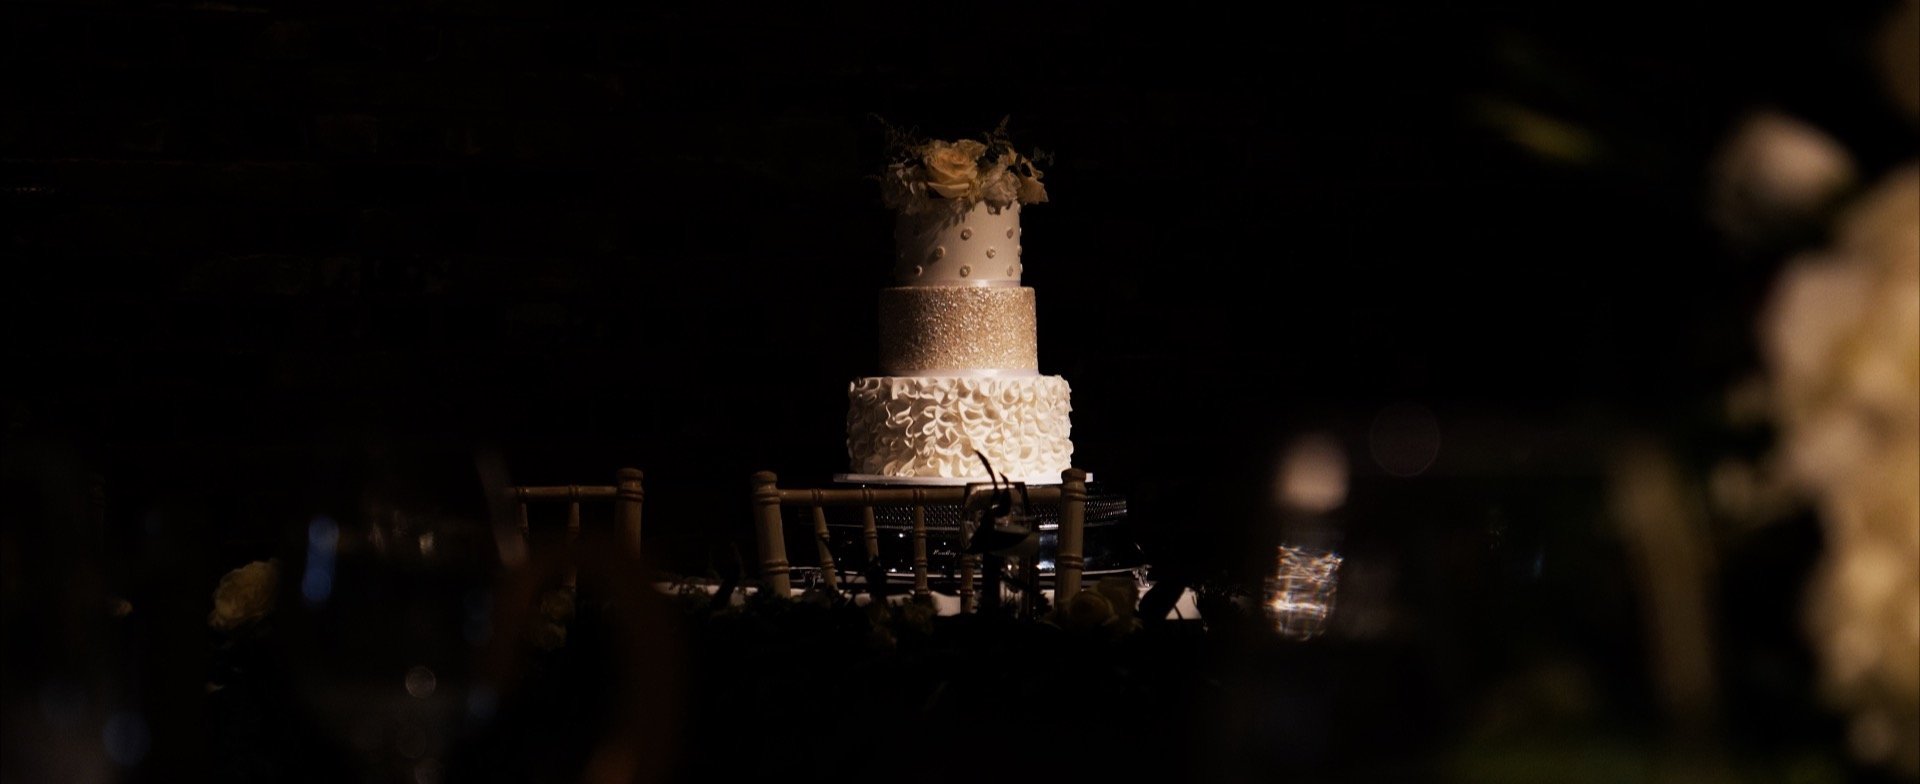 Cooling castle wedding cake video.jpg